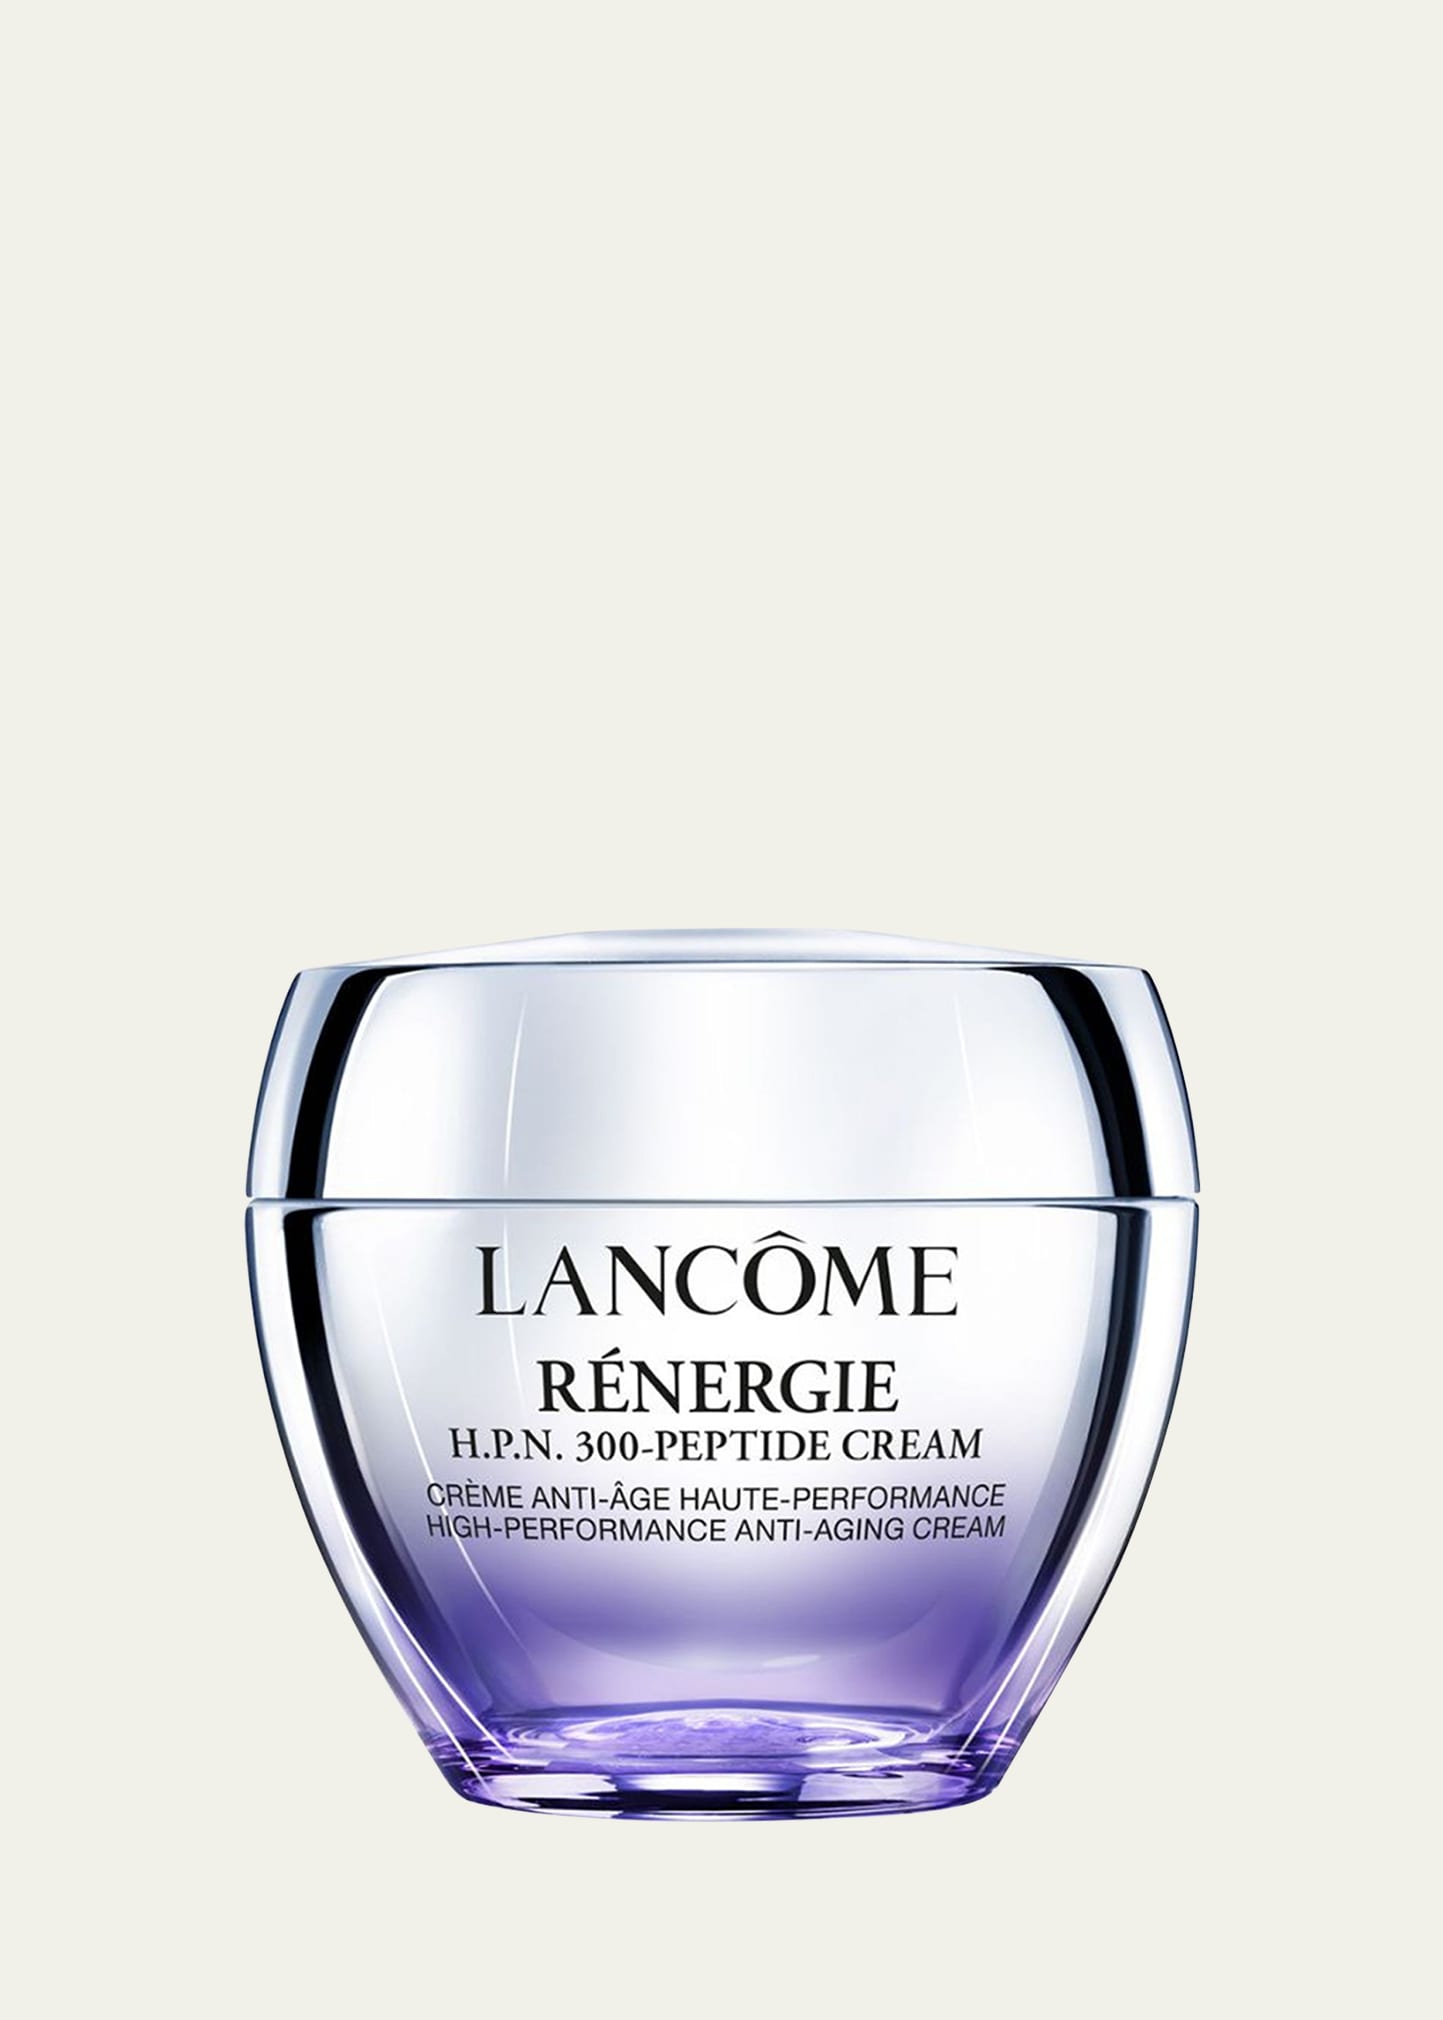 Lancôme Rénergie H. P. N. 300-peptide Cream, 1.7 Oz. In White